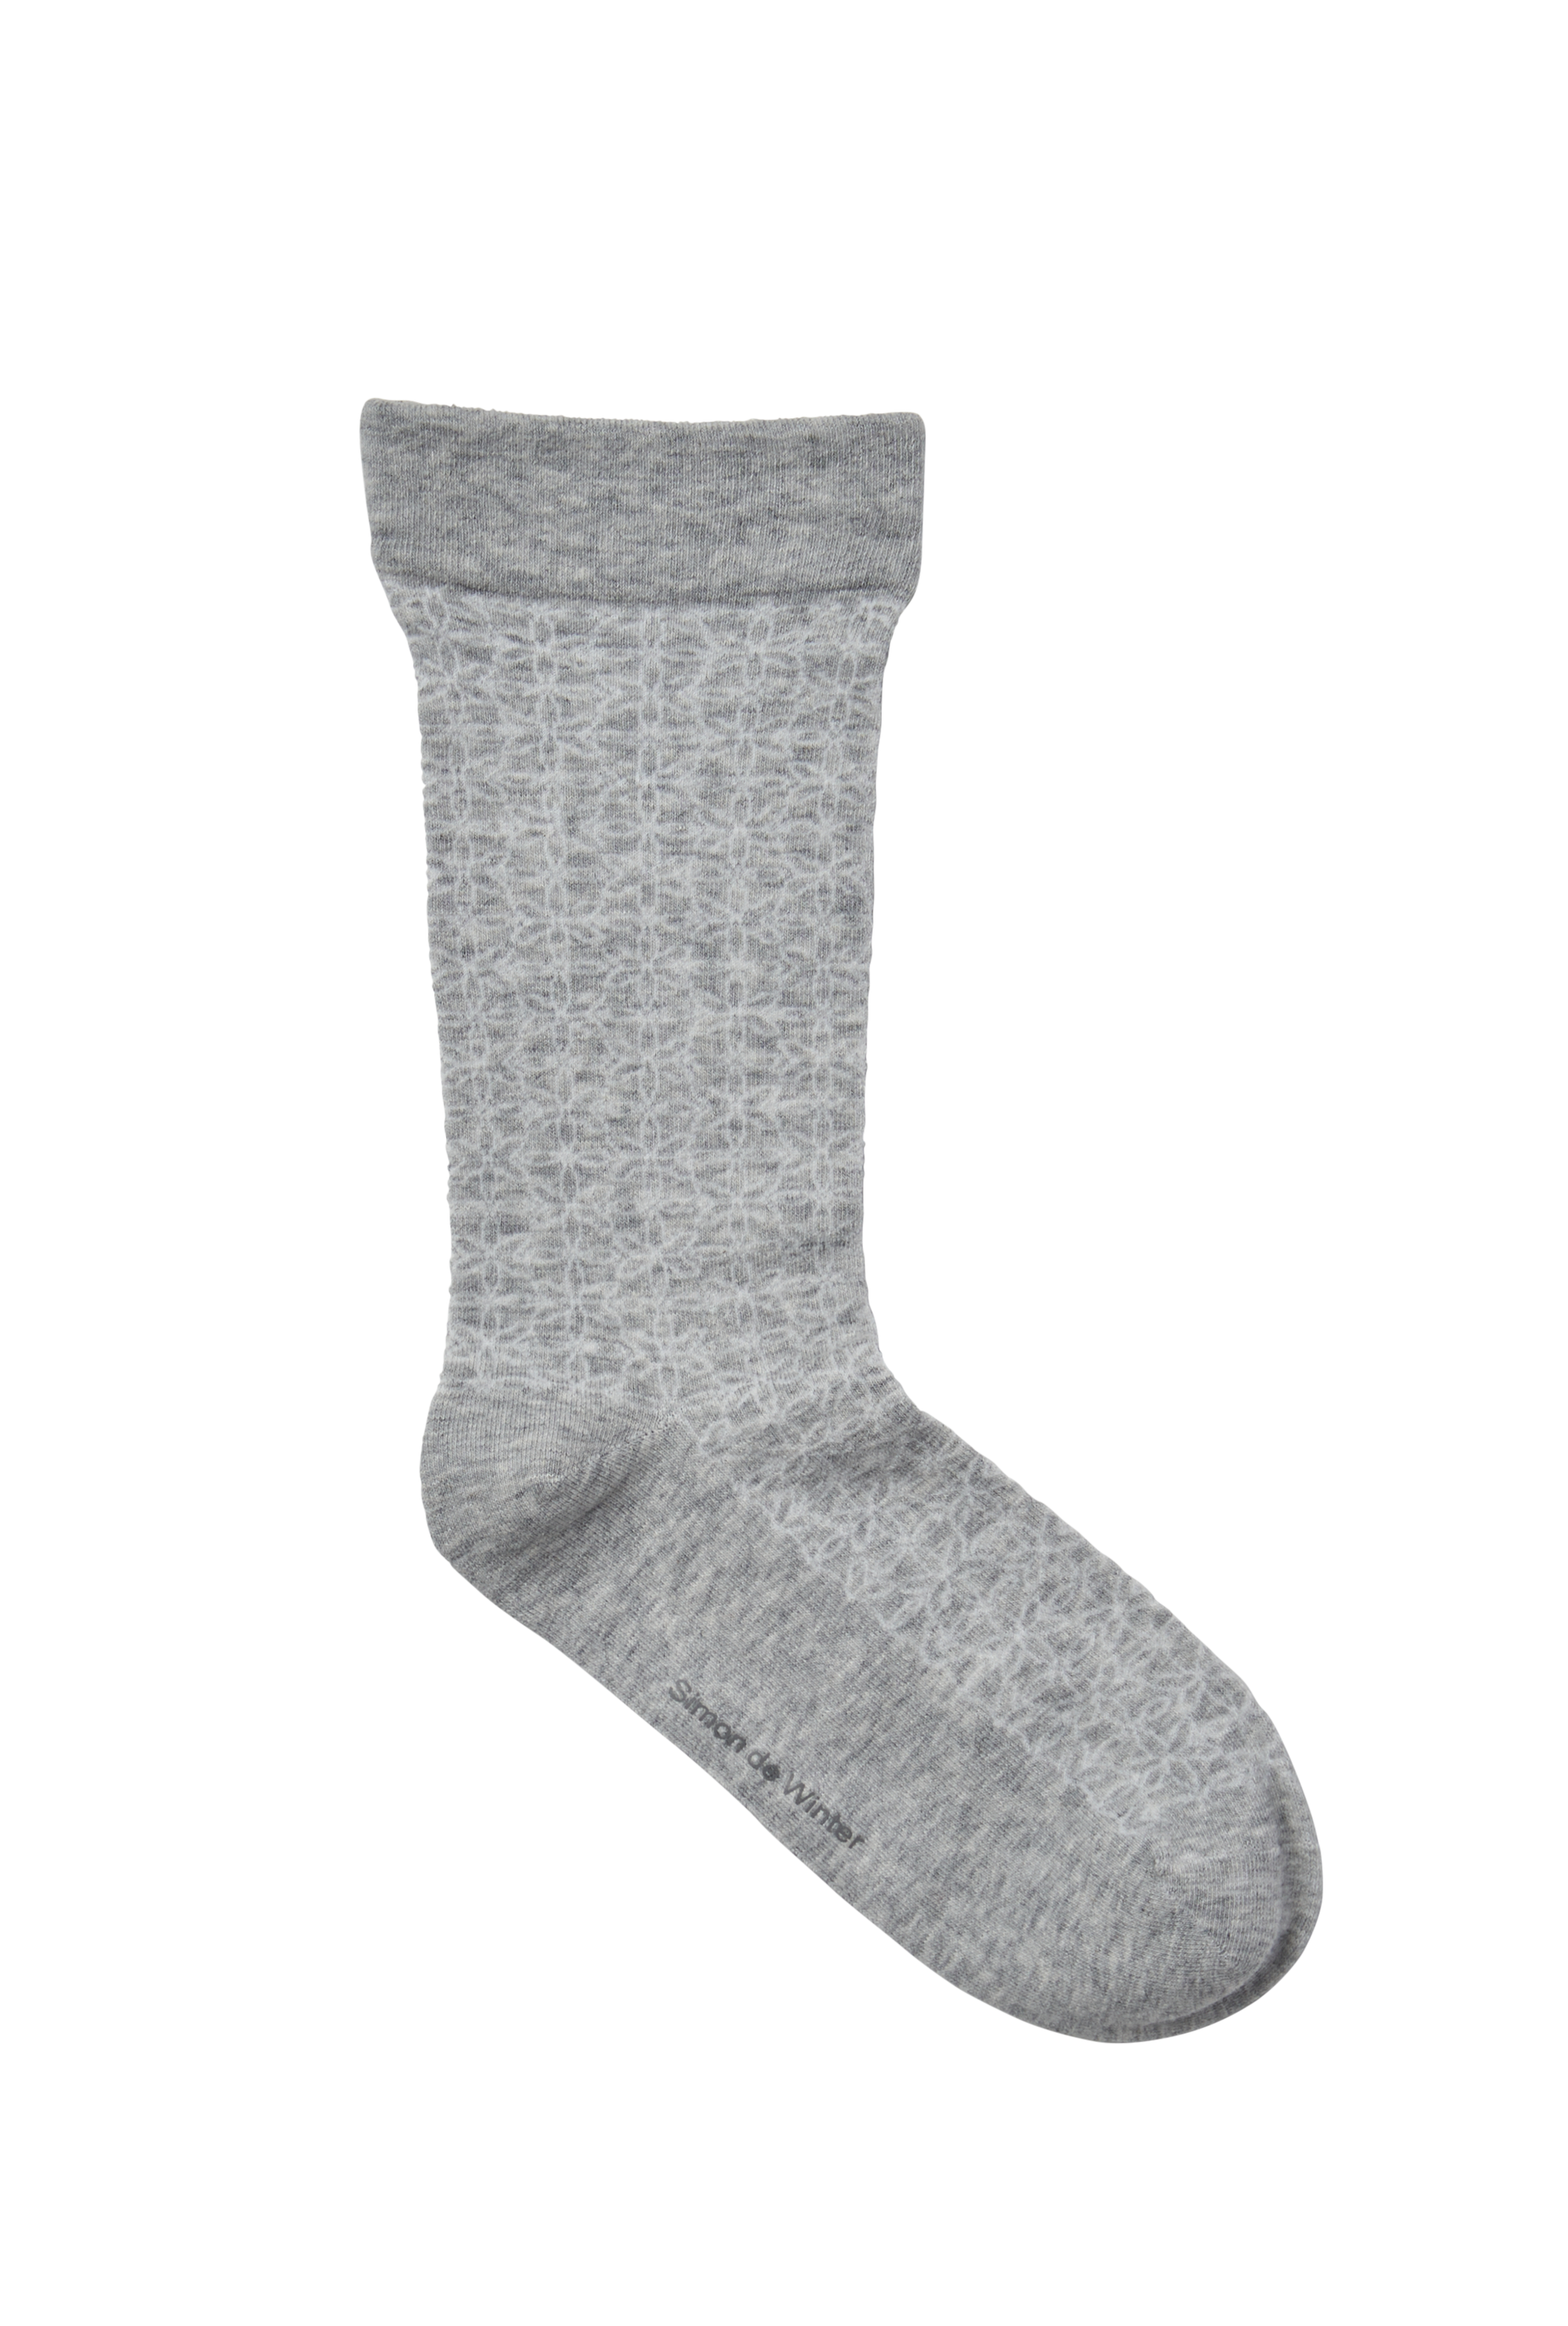 Side of Simon de Winter Women's Circulation Comfort Cotton Crew Socks in Cool Grey Marle